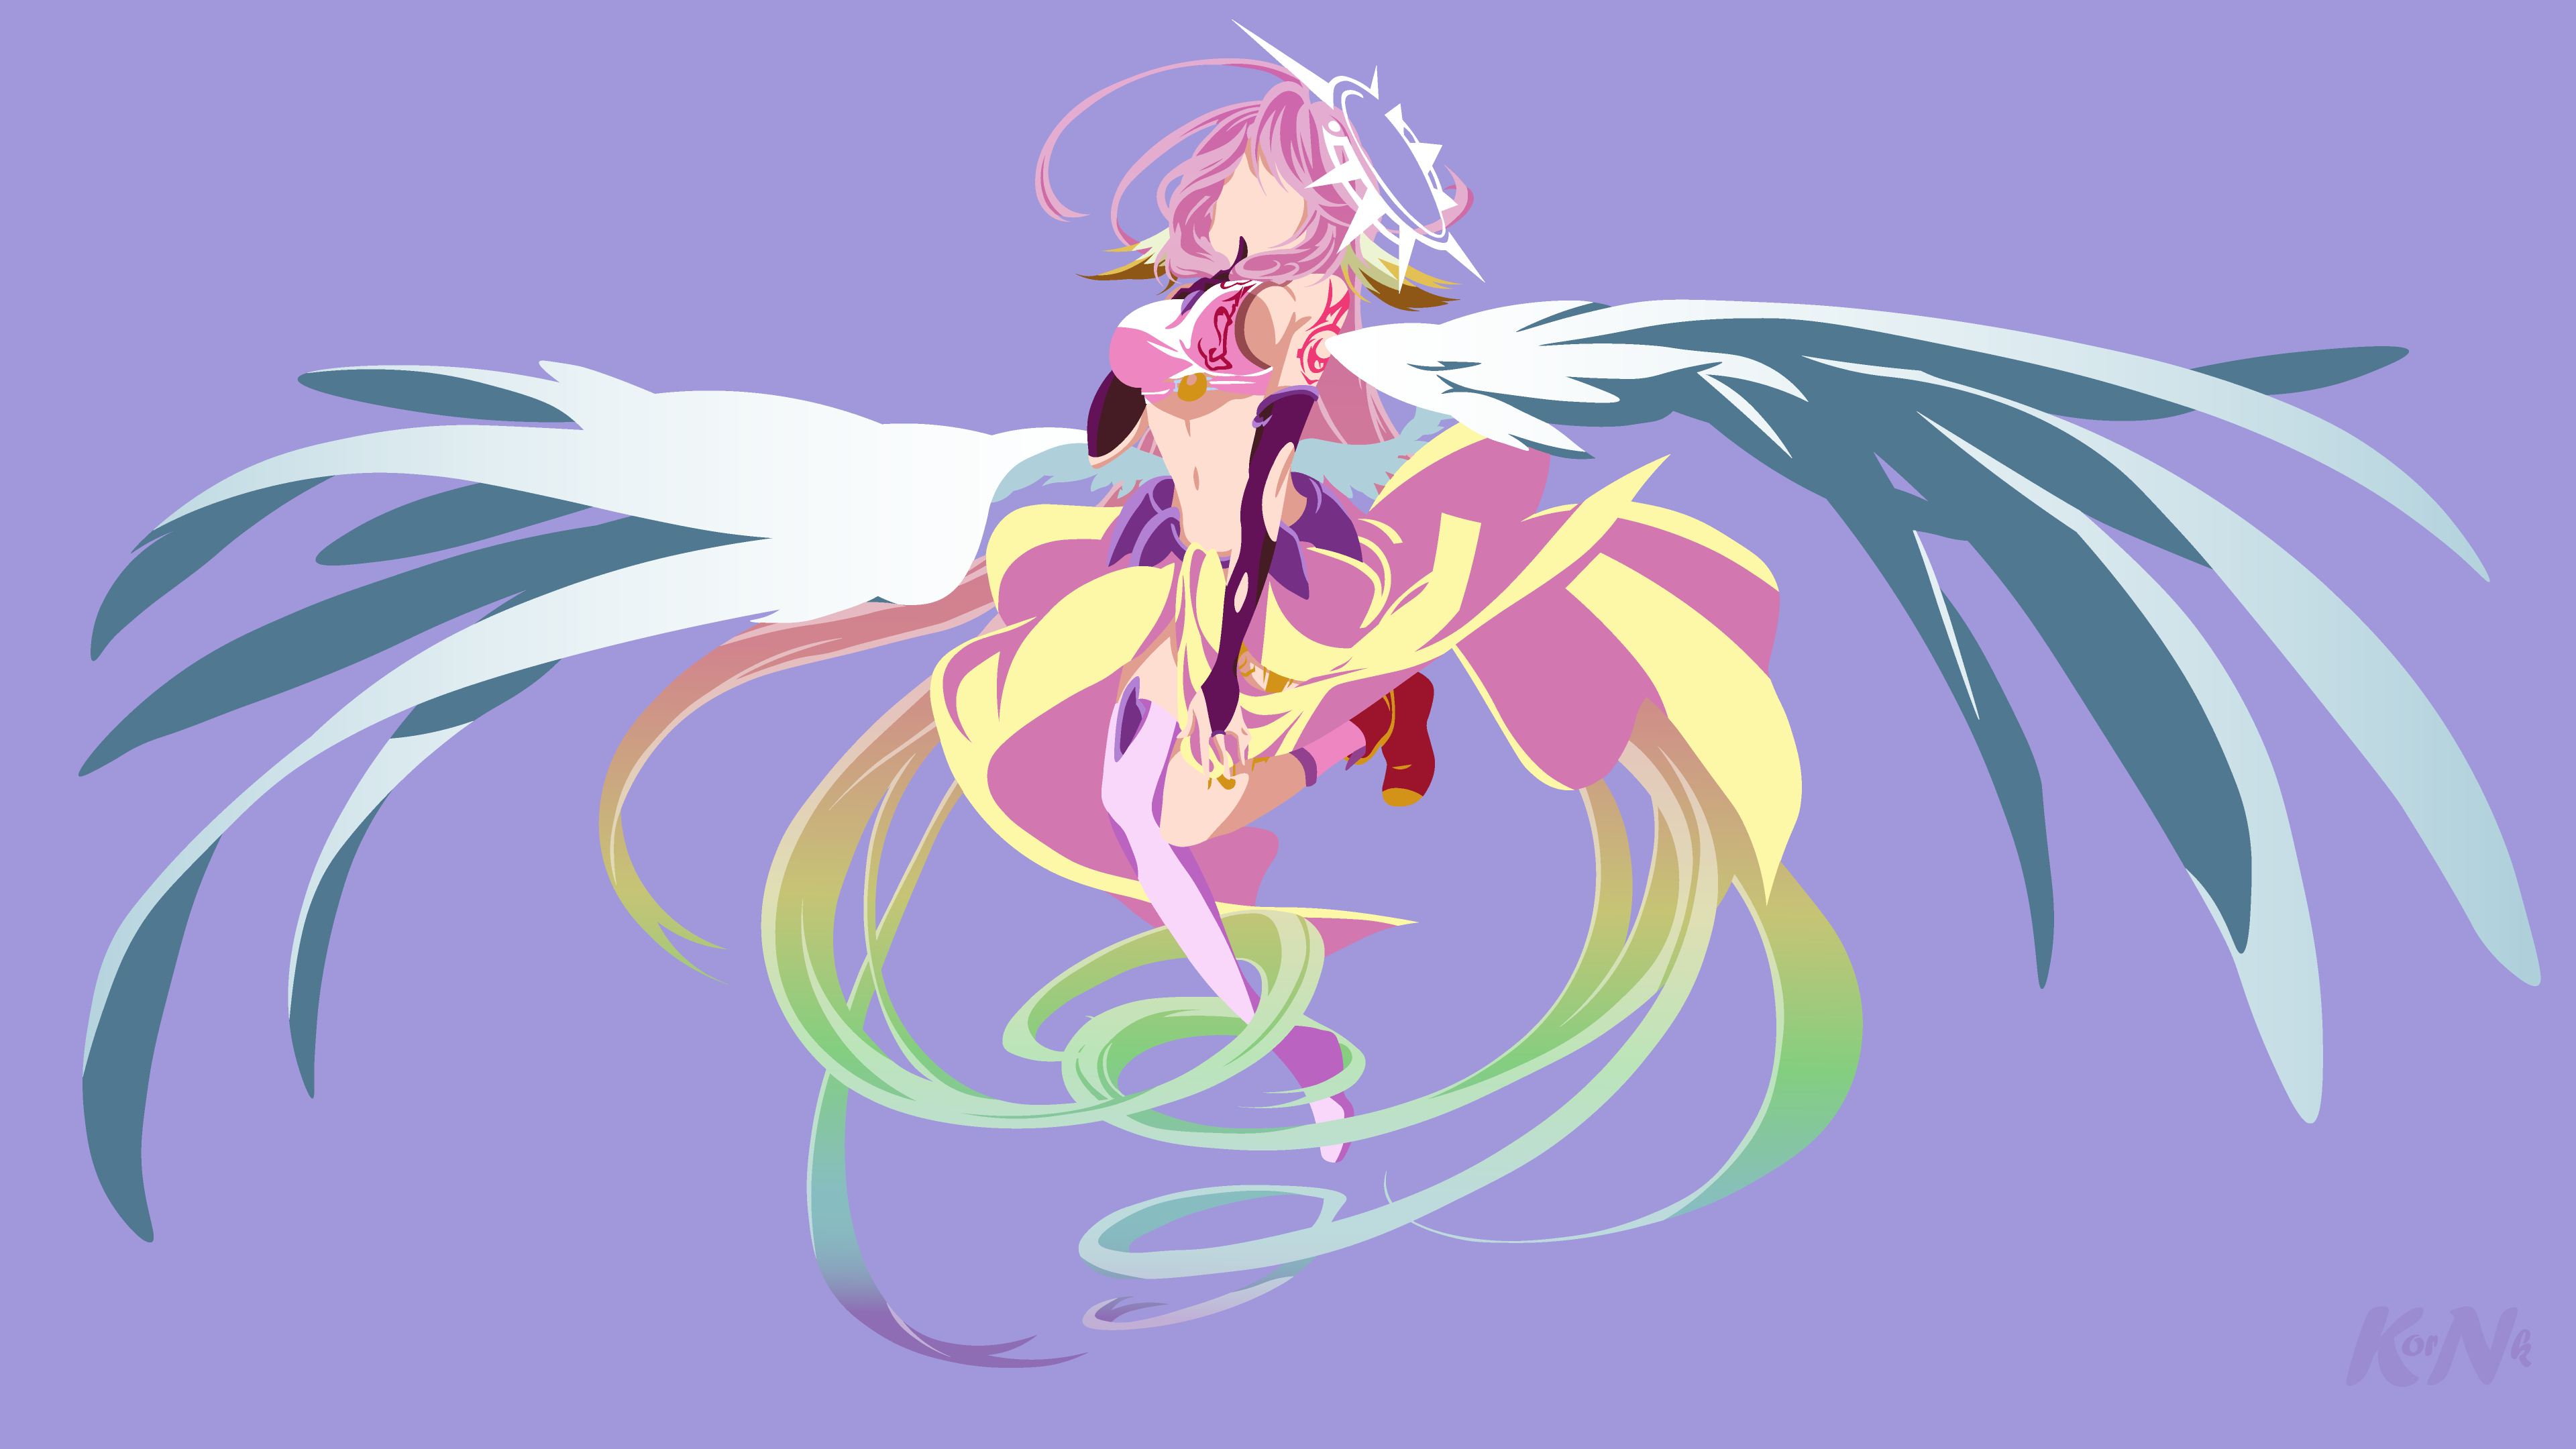 Anime 3840x2160 anime girls No Game No Life Jibril minimalism pink hair wings purple background